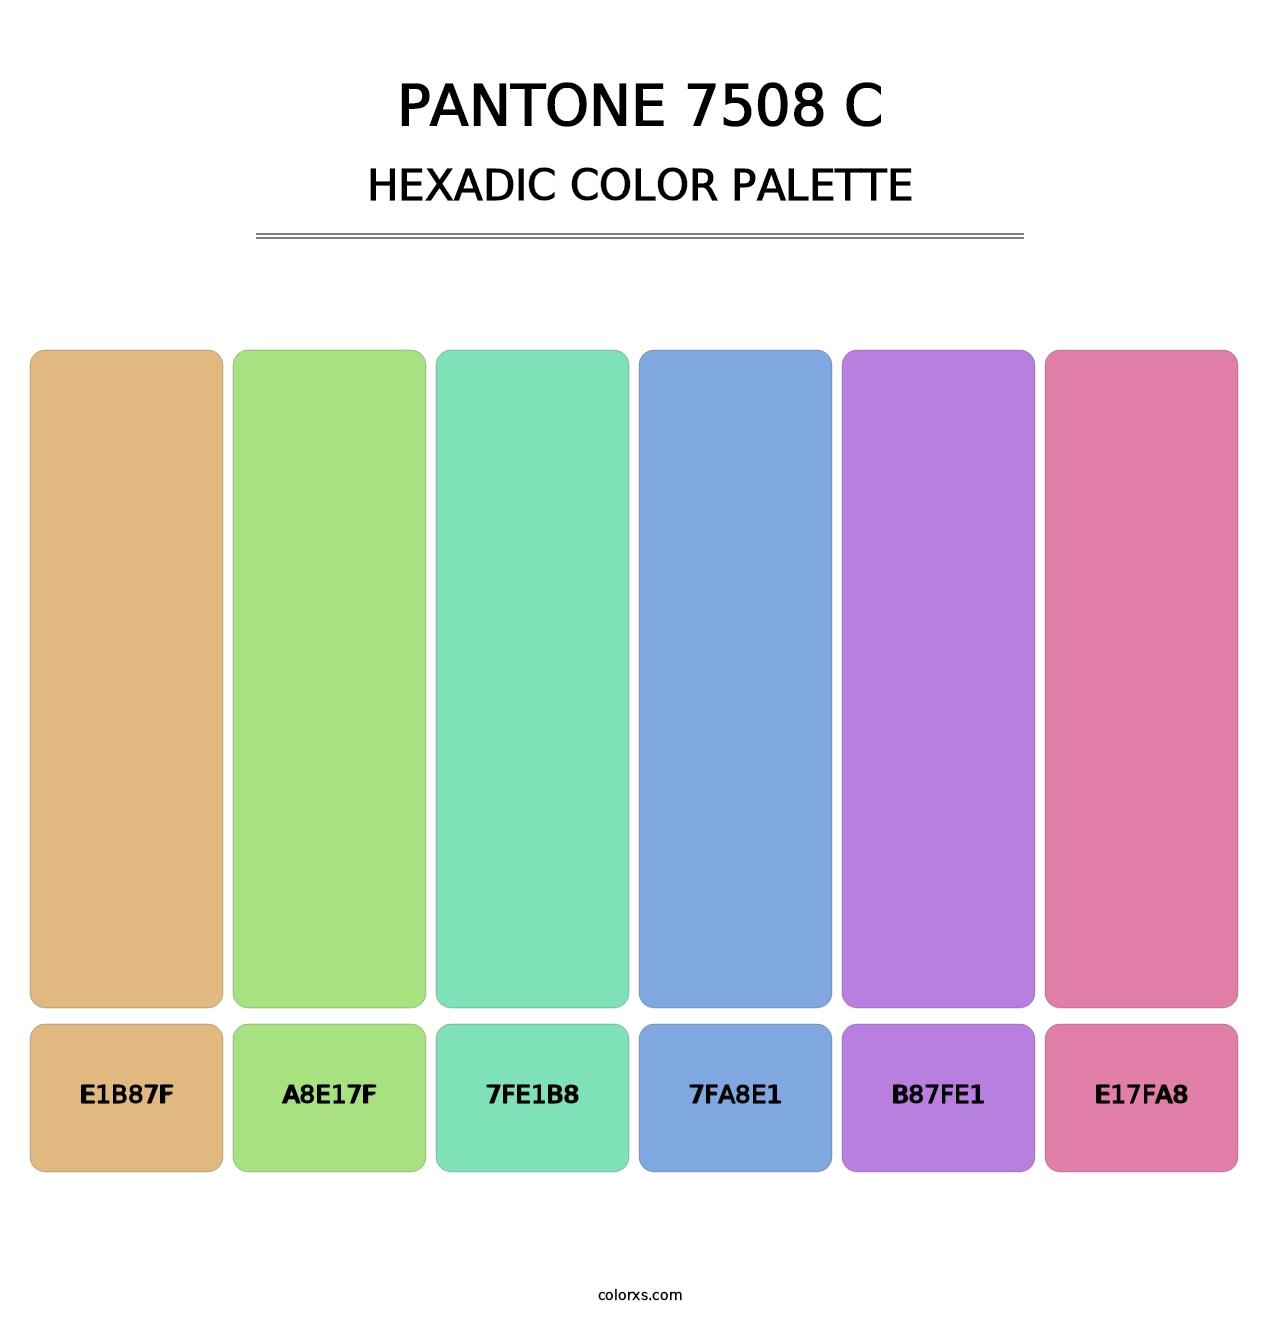 PANTONE 7508 C - Hexadic Color Palette